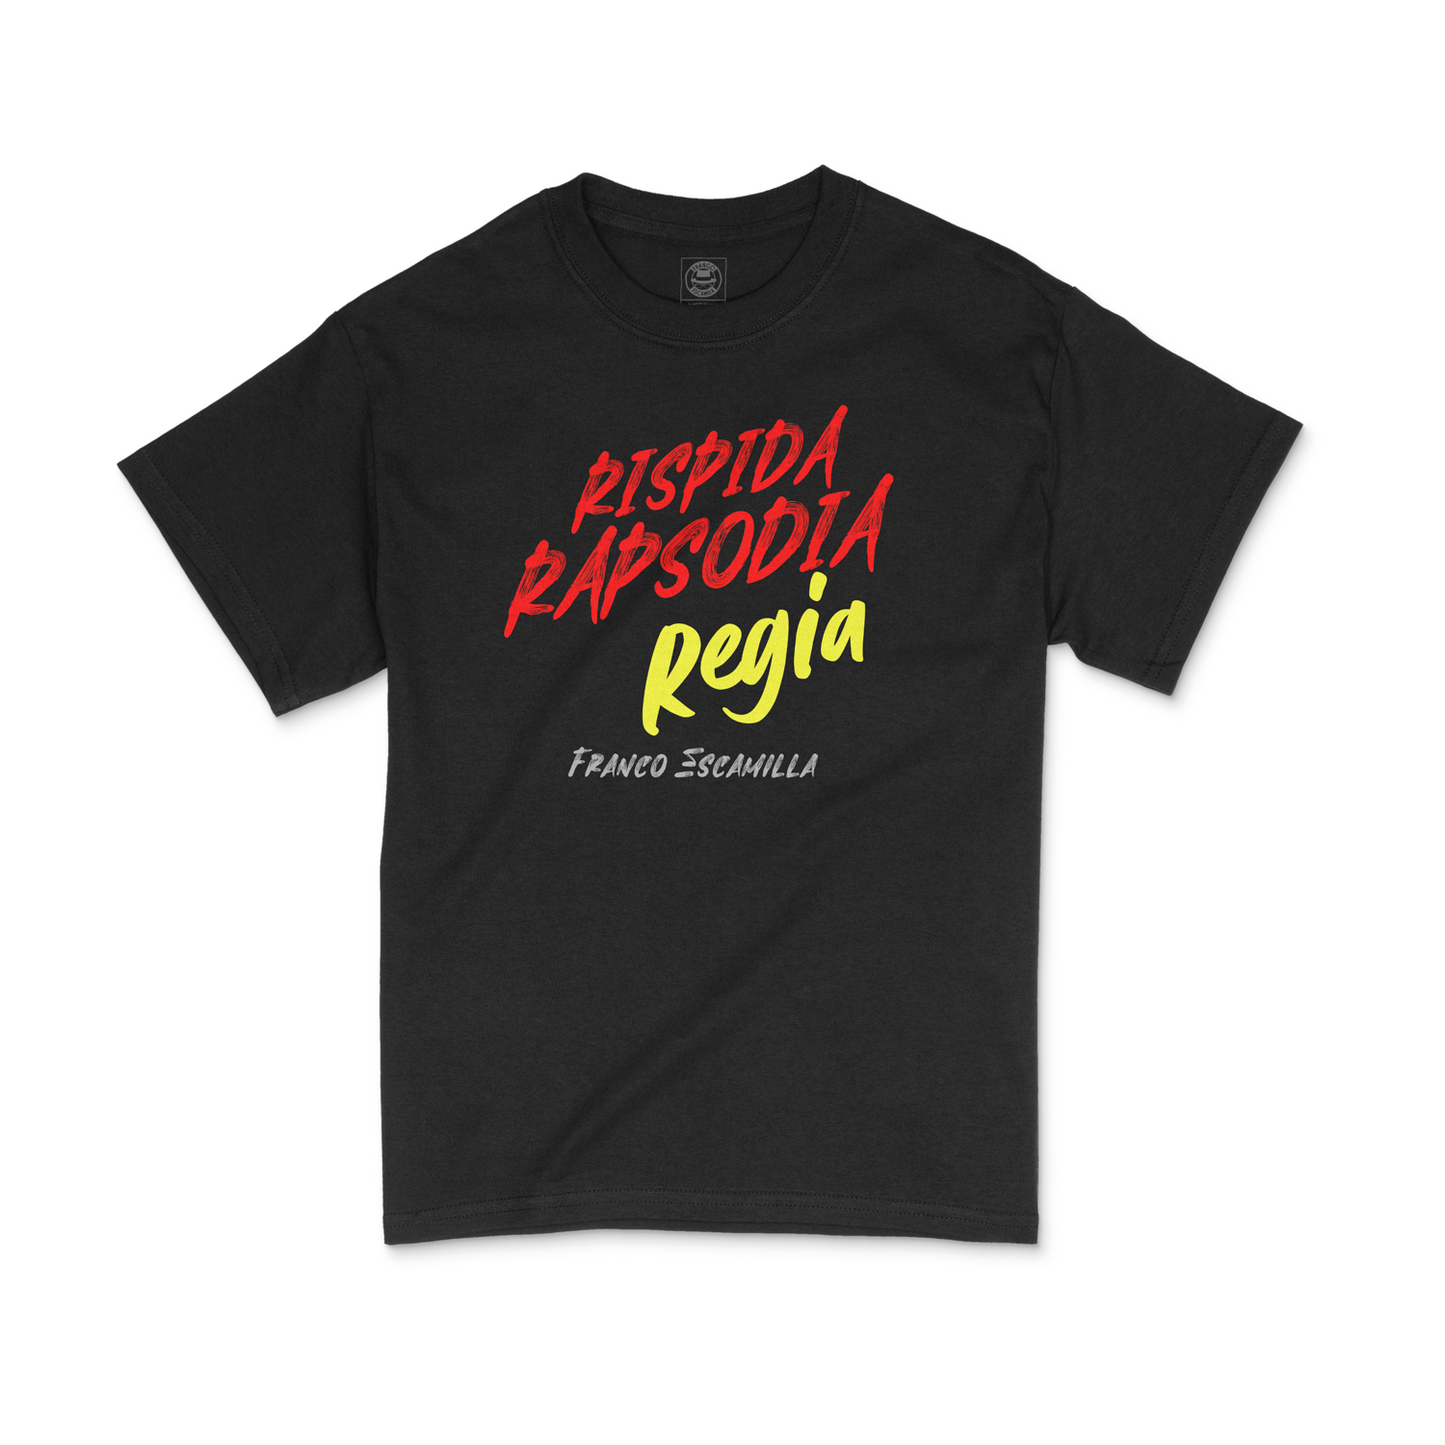 Rispida Rapsodia Regia - Shirt